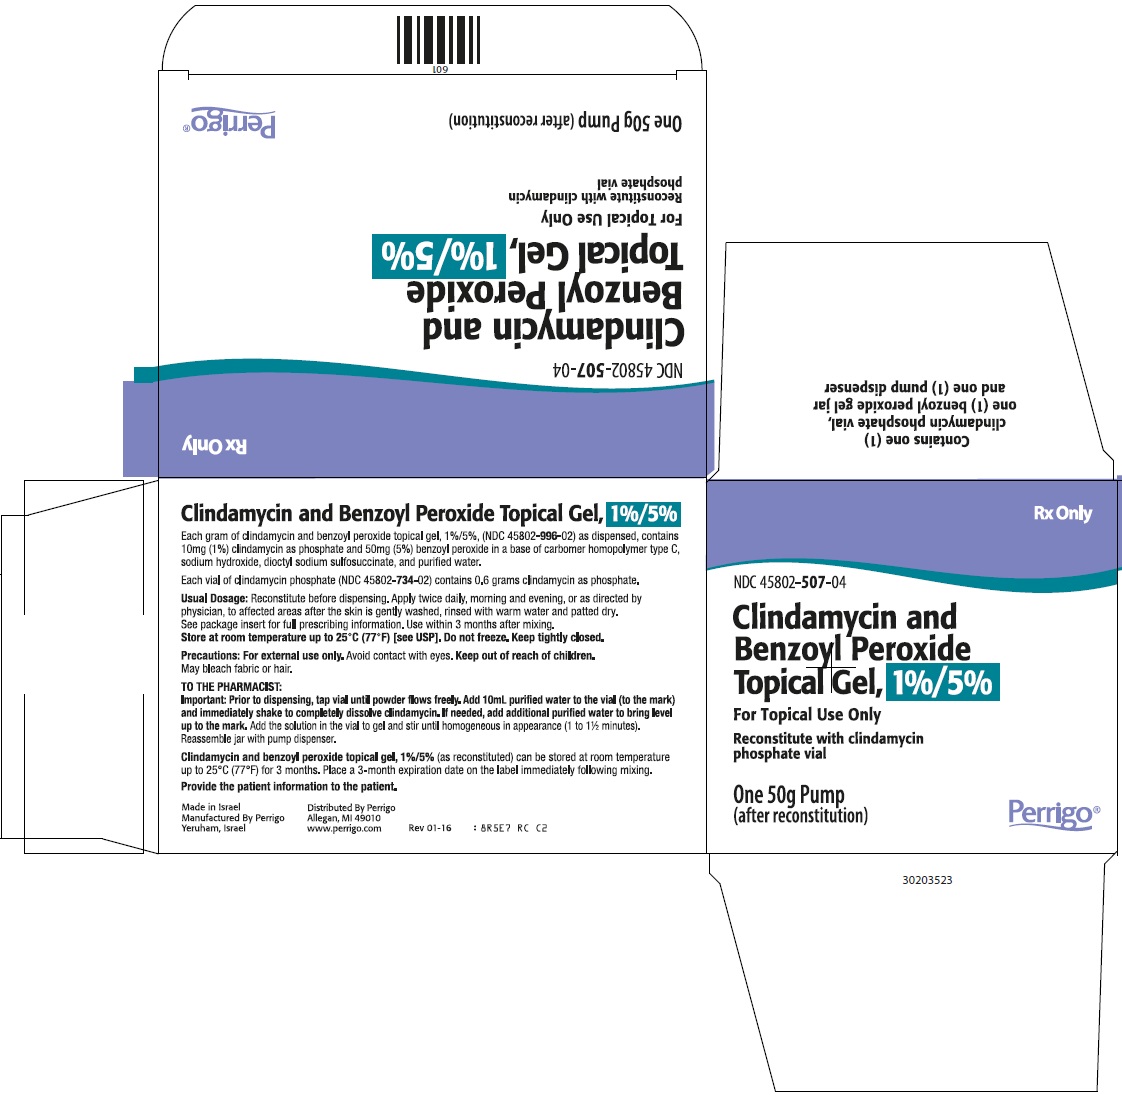 Clindamycin and Benzoyl Peroxide Topical Gel Carton Image 2